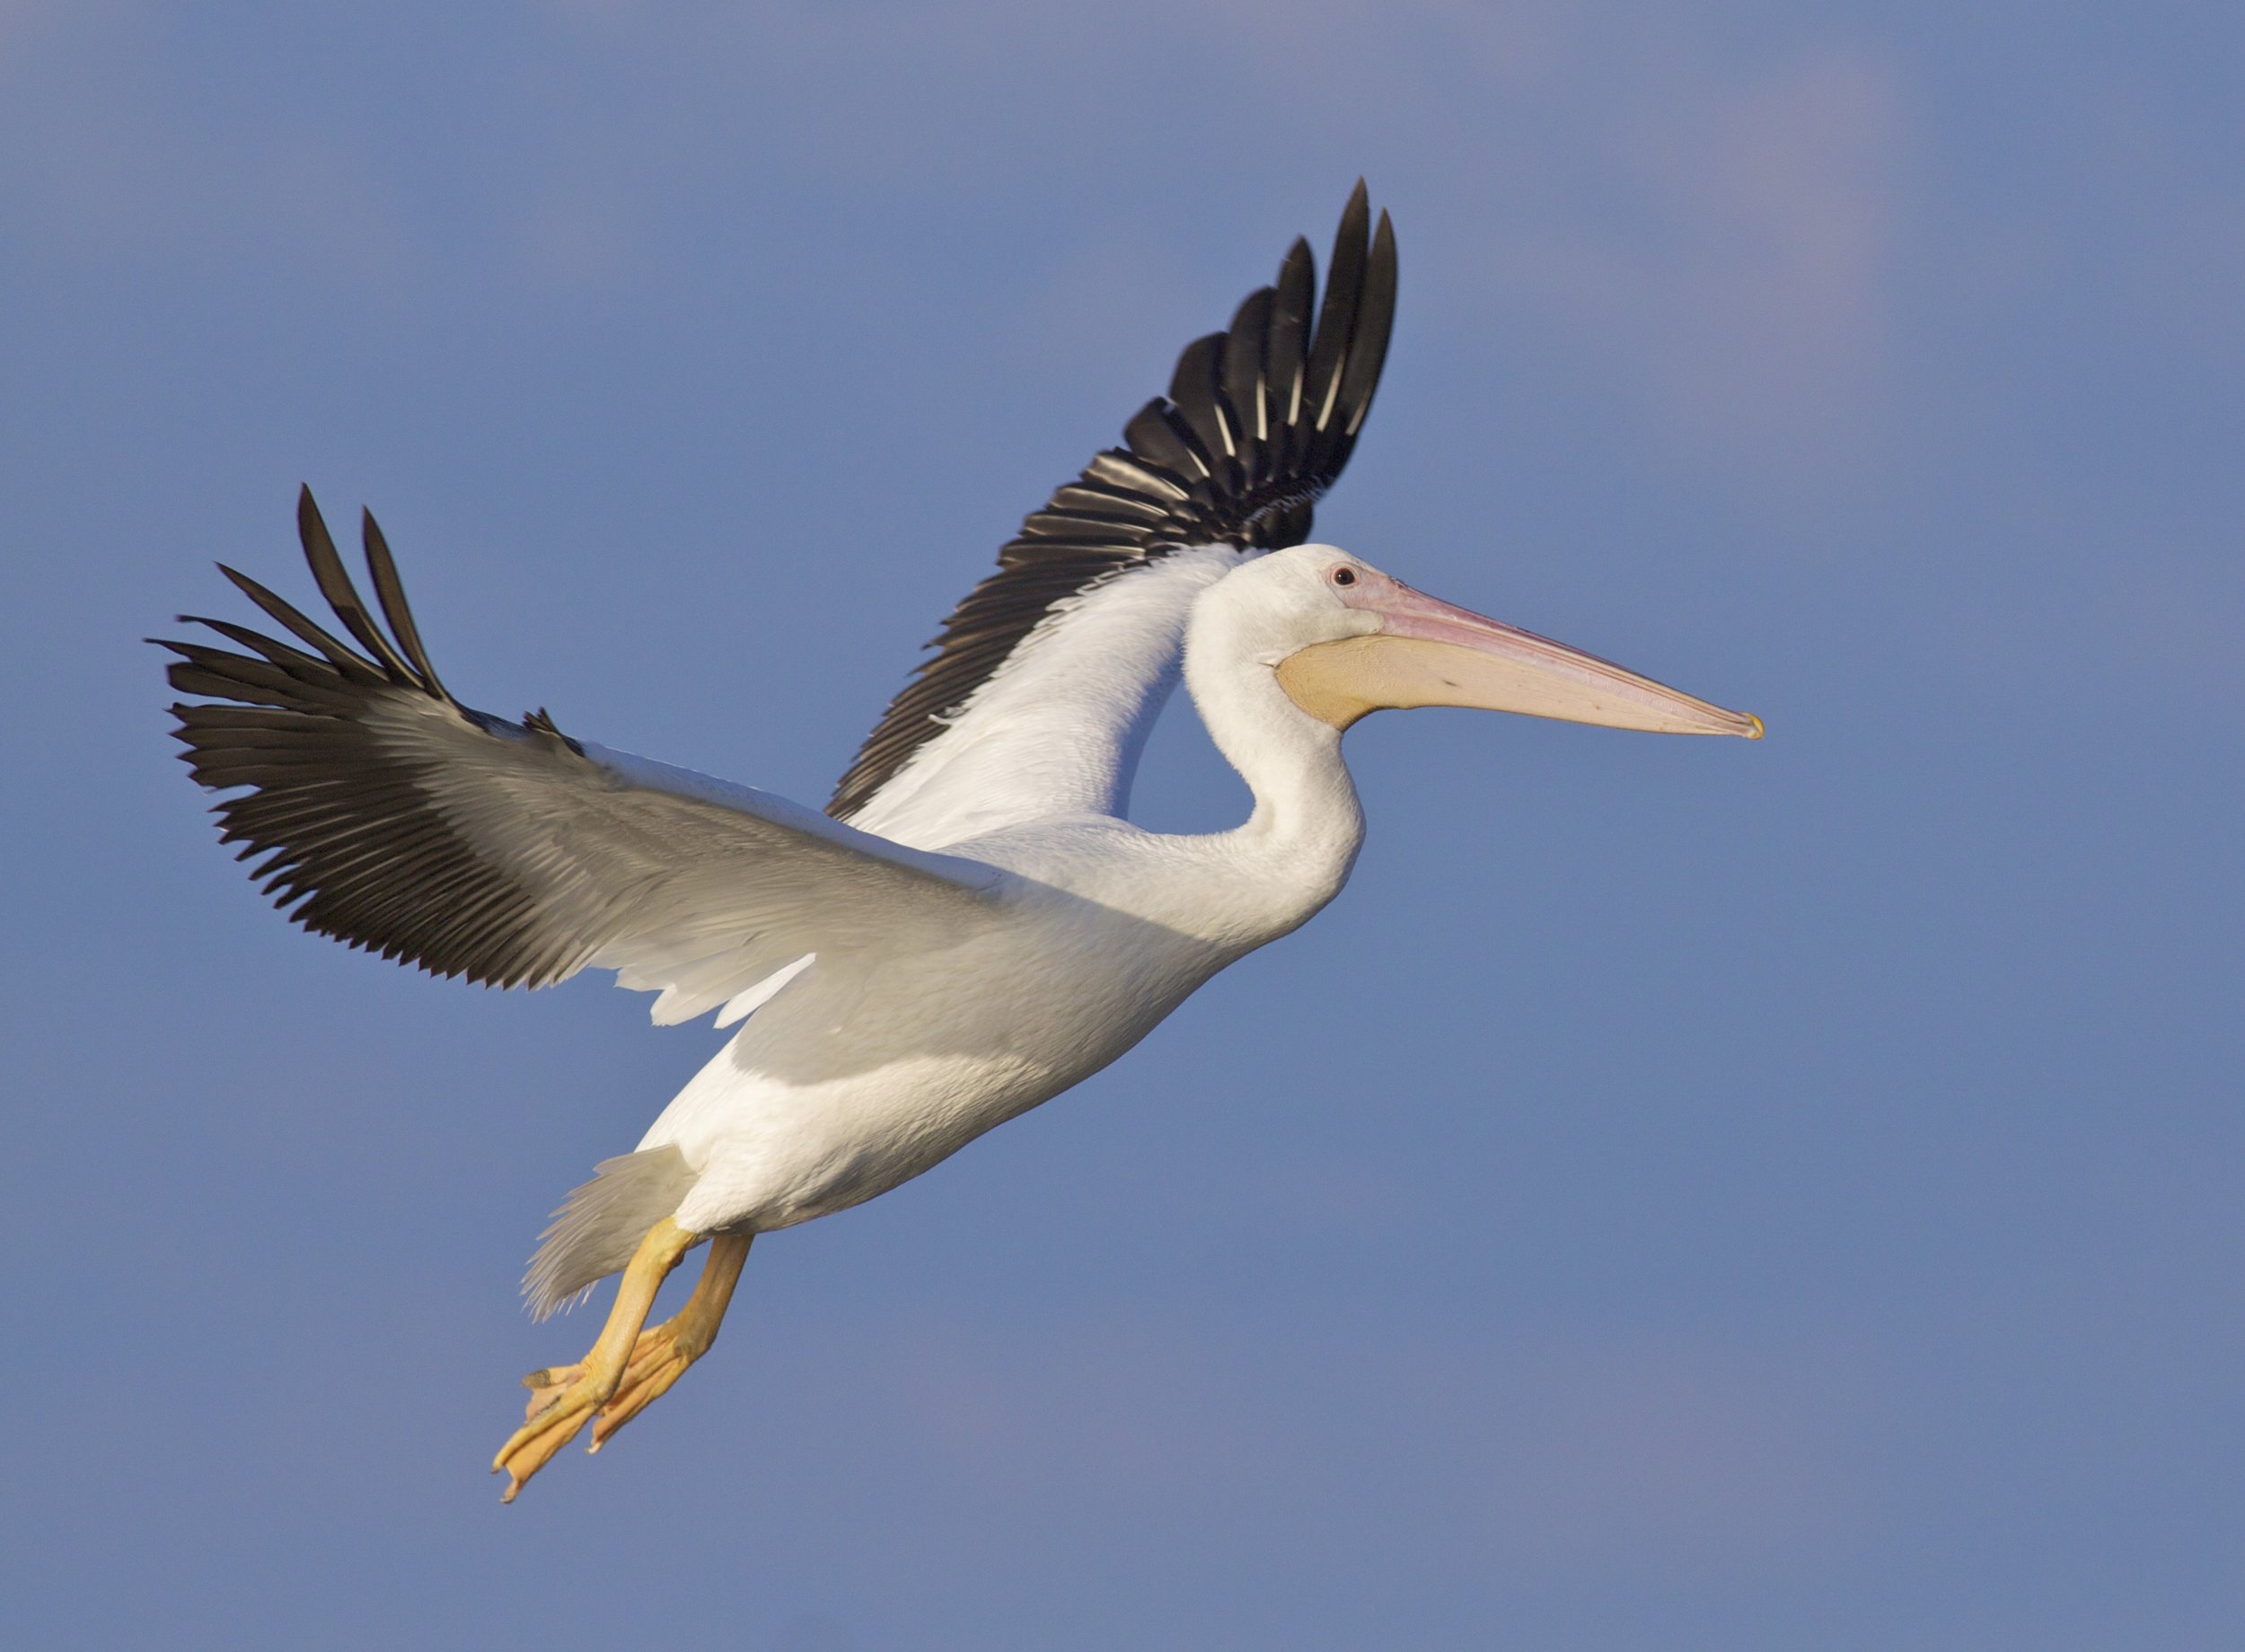 Meet the Cute American White Pelican by Birdorable